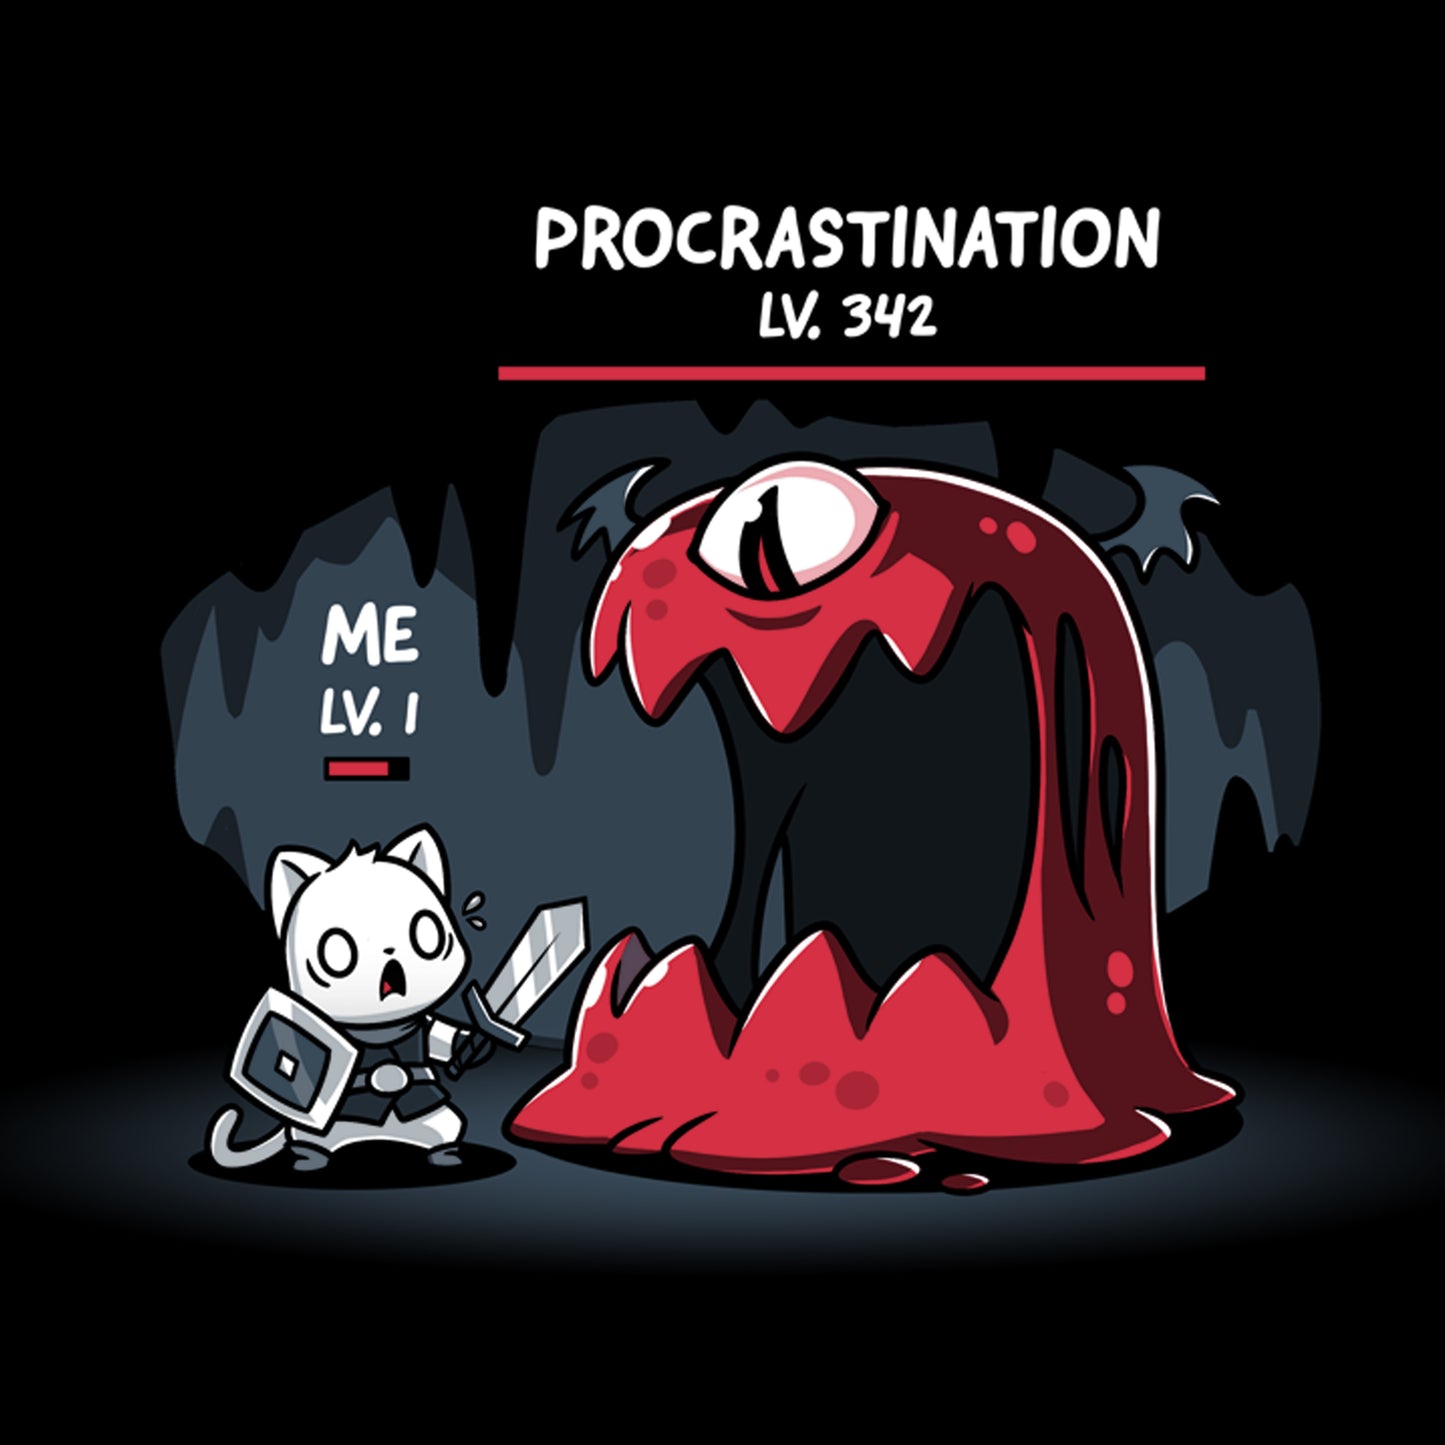 TeeTurtle's Me Vs. Procrastination T-shirt showcases the battle of Me vs. Procrastination.